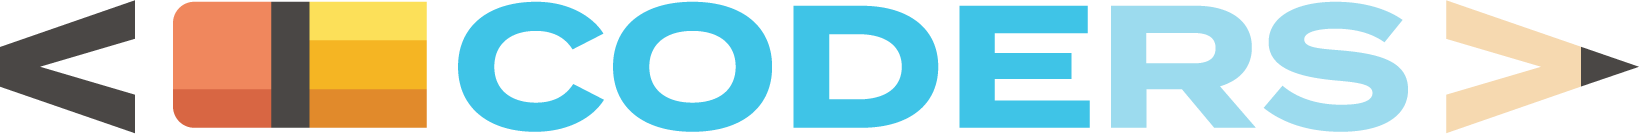 CODERS Logo